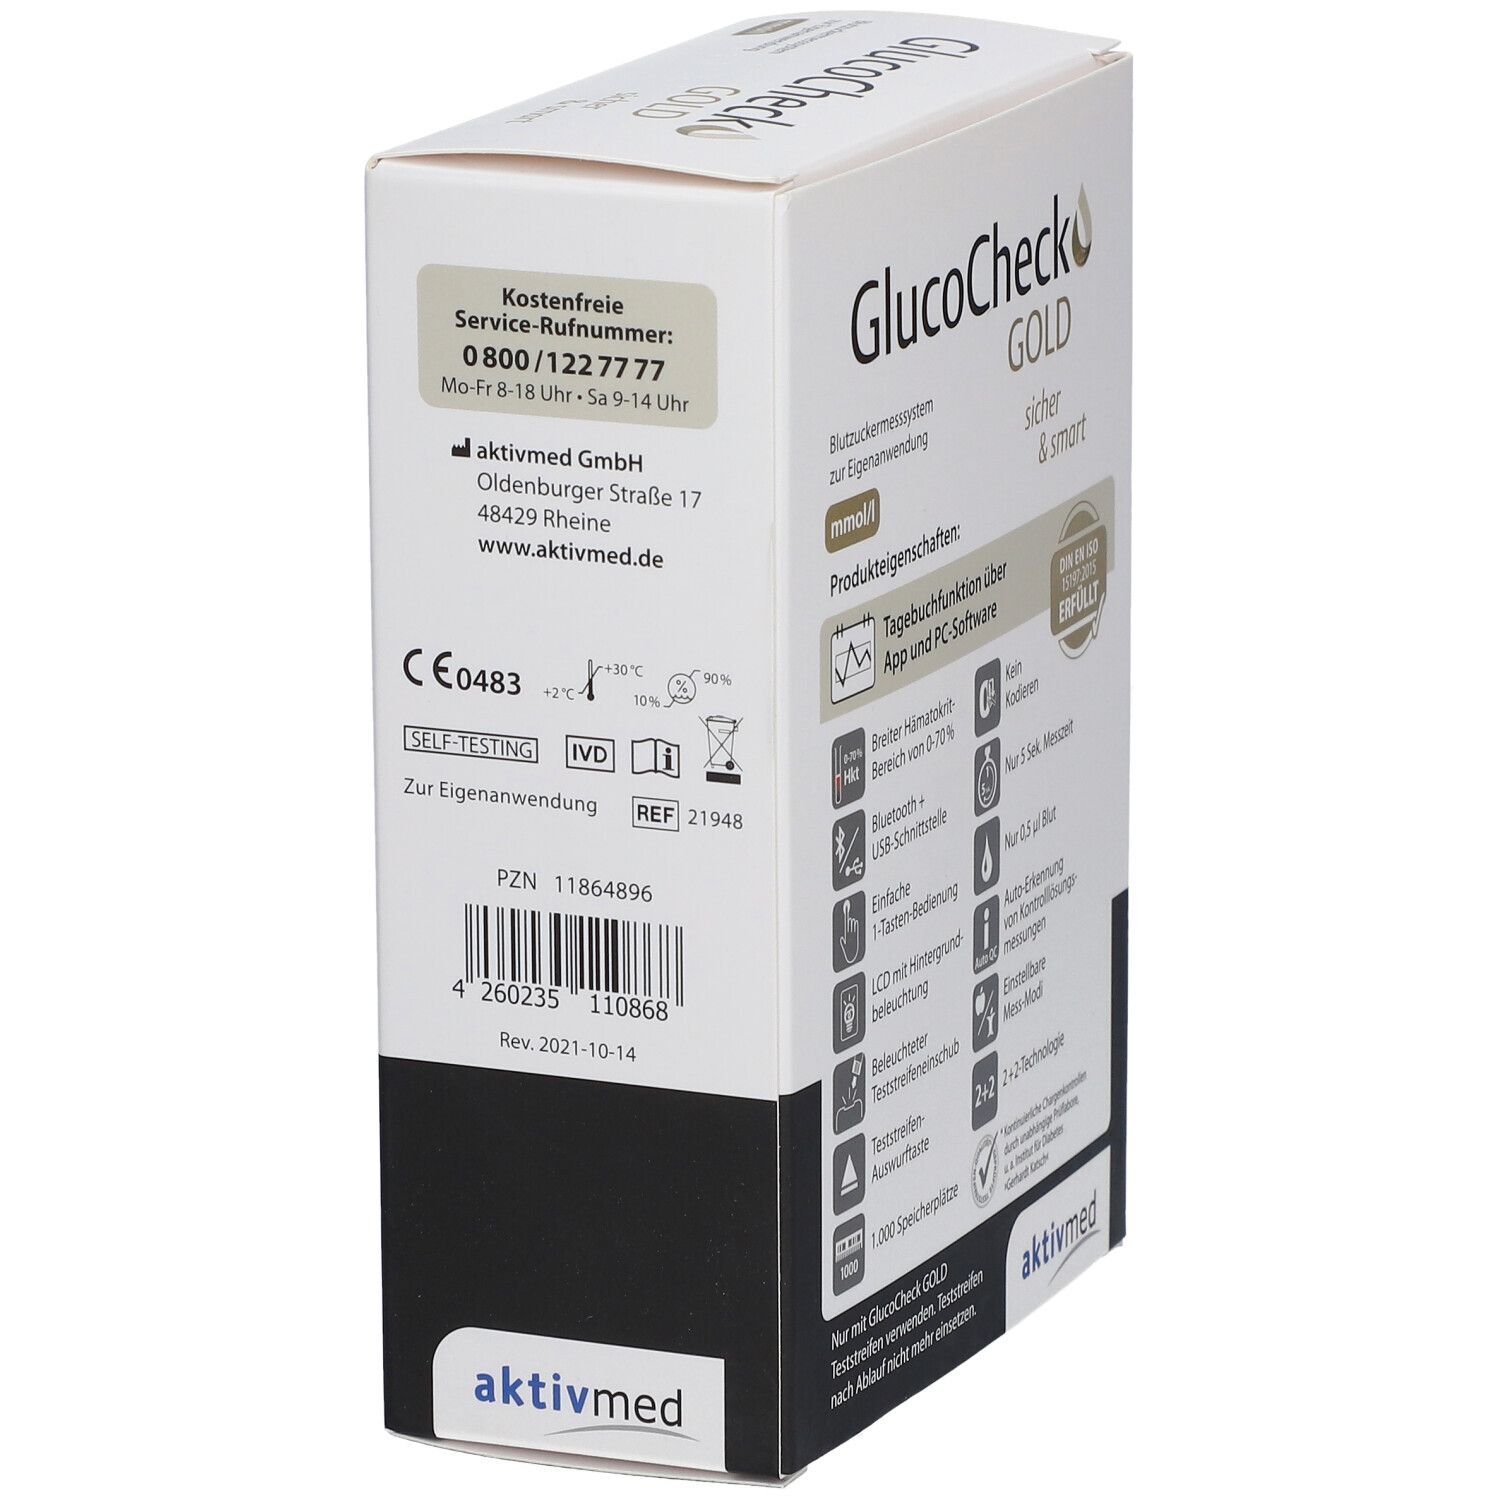 GlucoCheck GOLD mmol/l